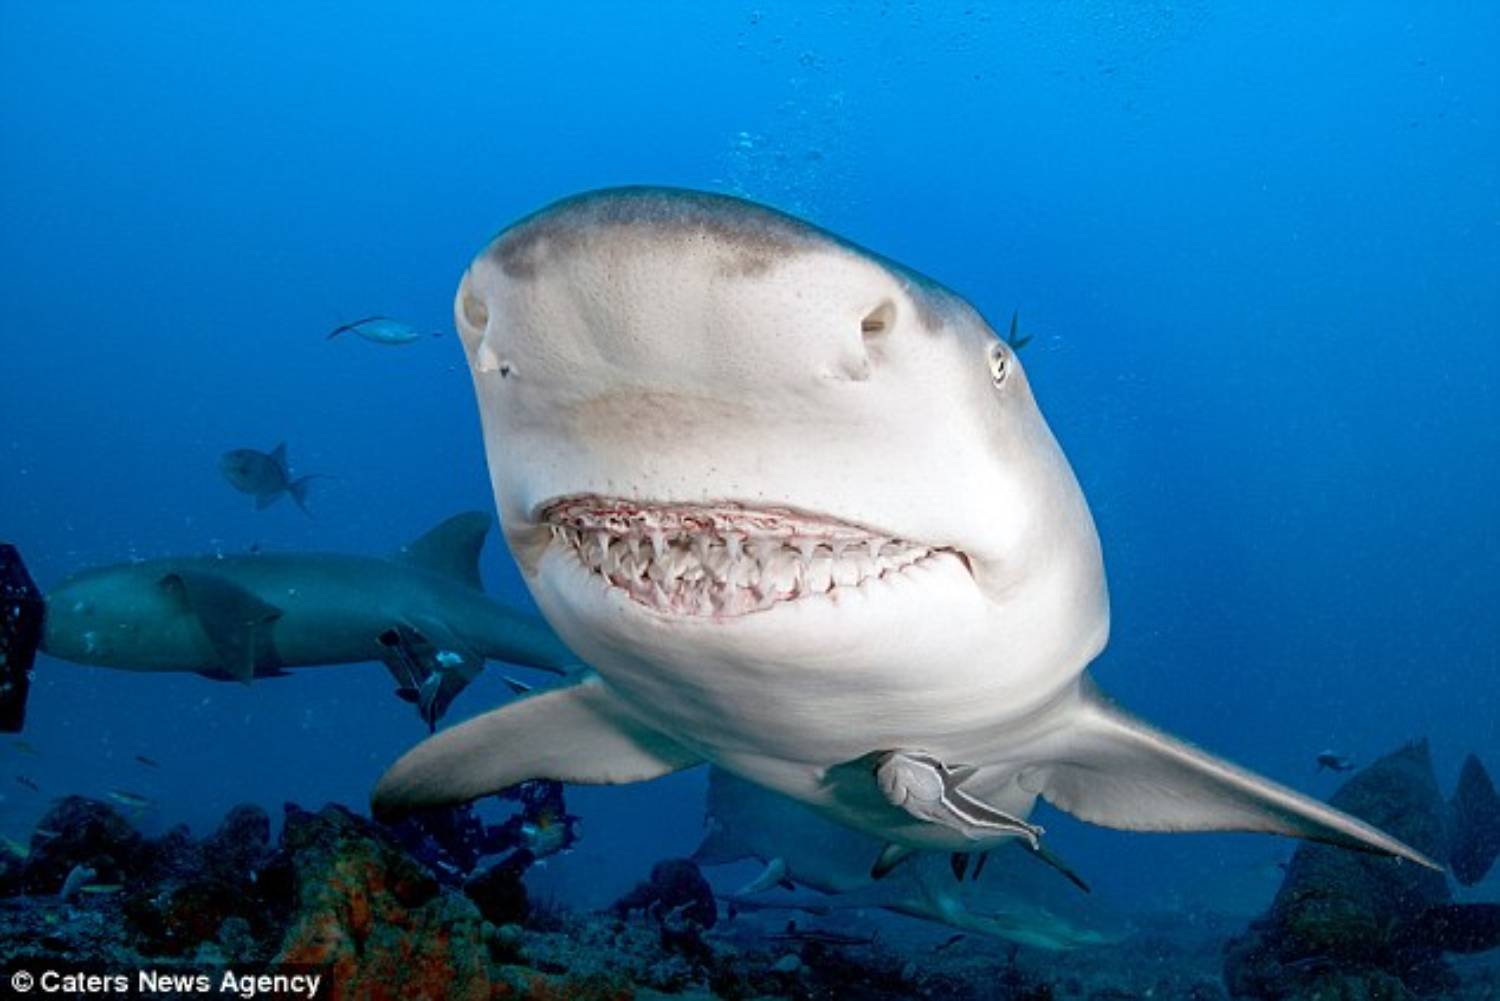 Snooty le requin citron souriant 7